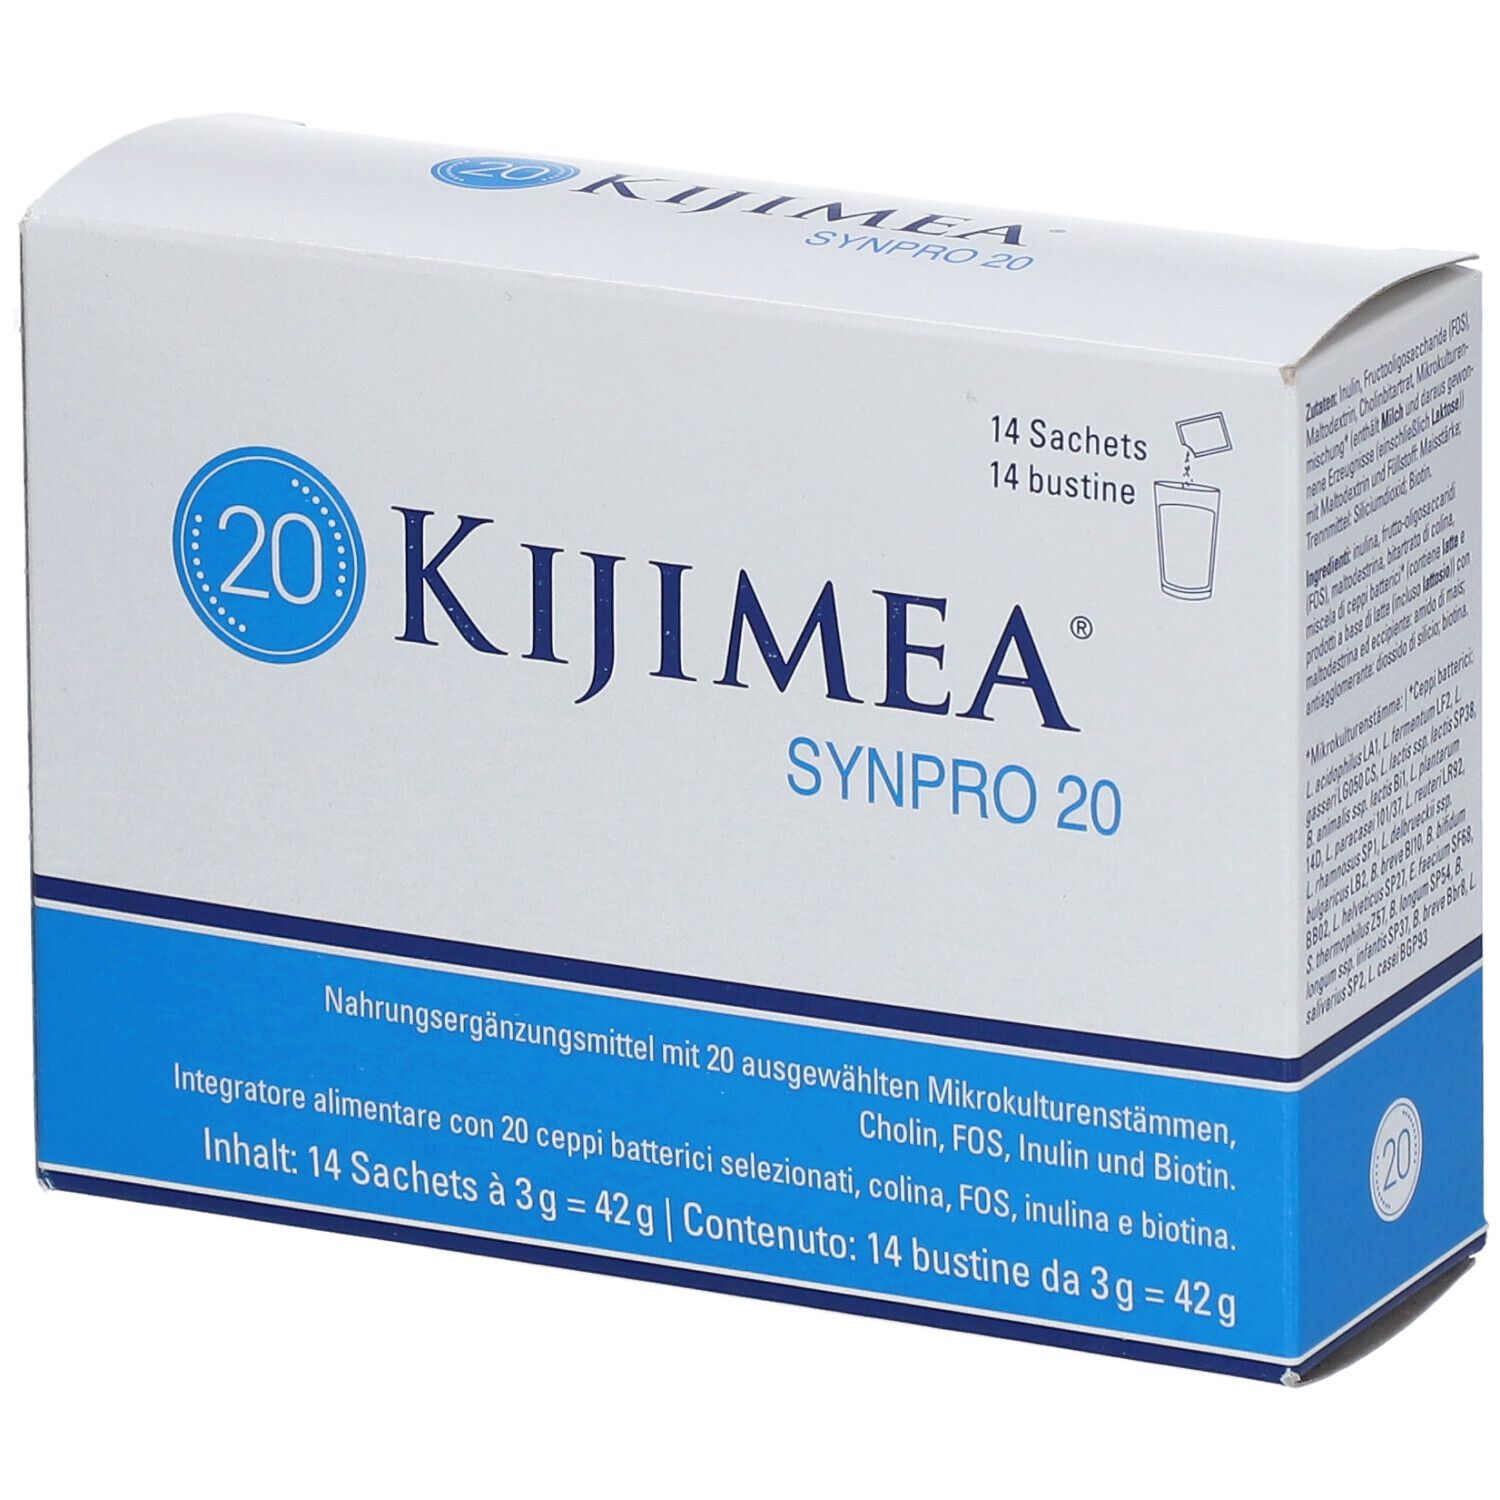 KIJIMEA® Synpro 20